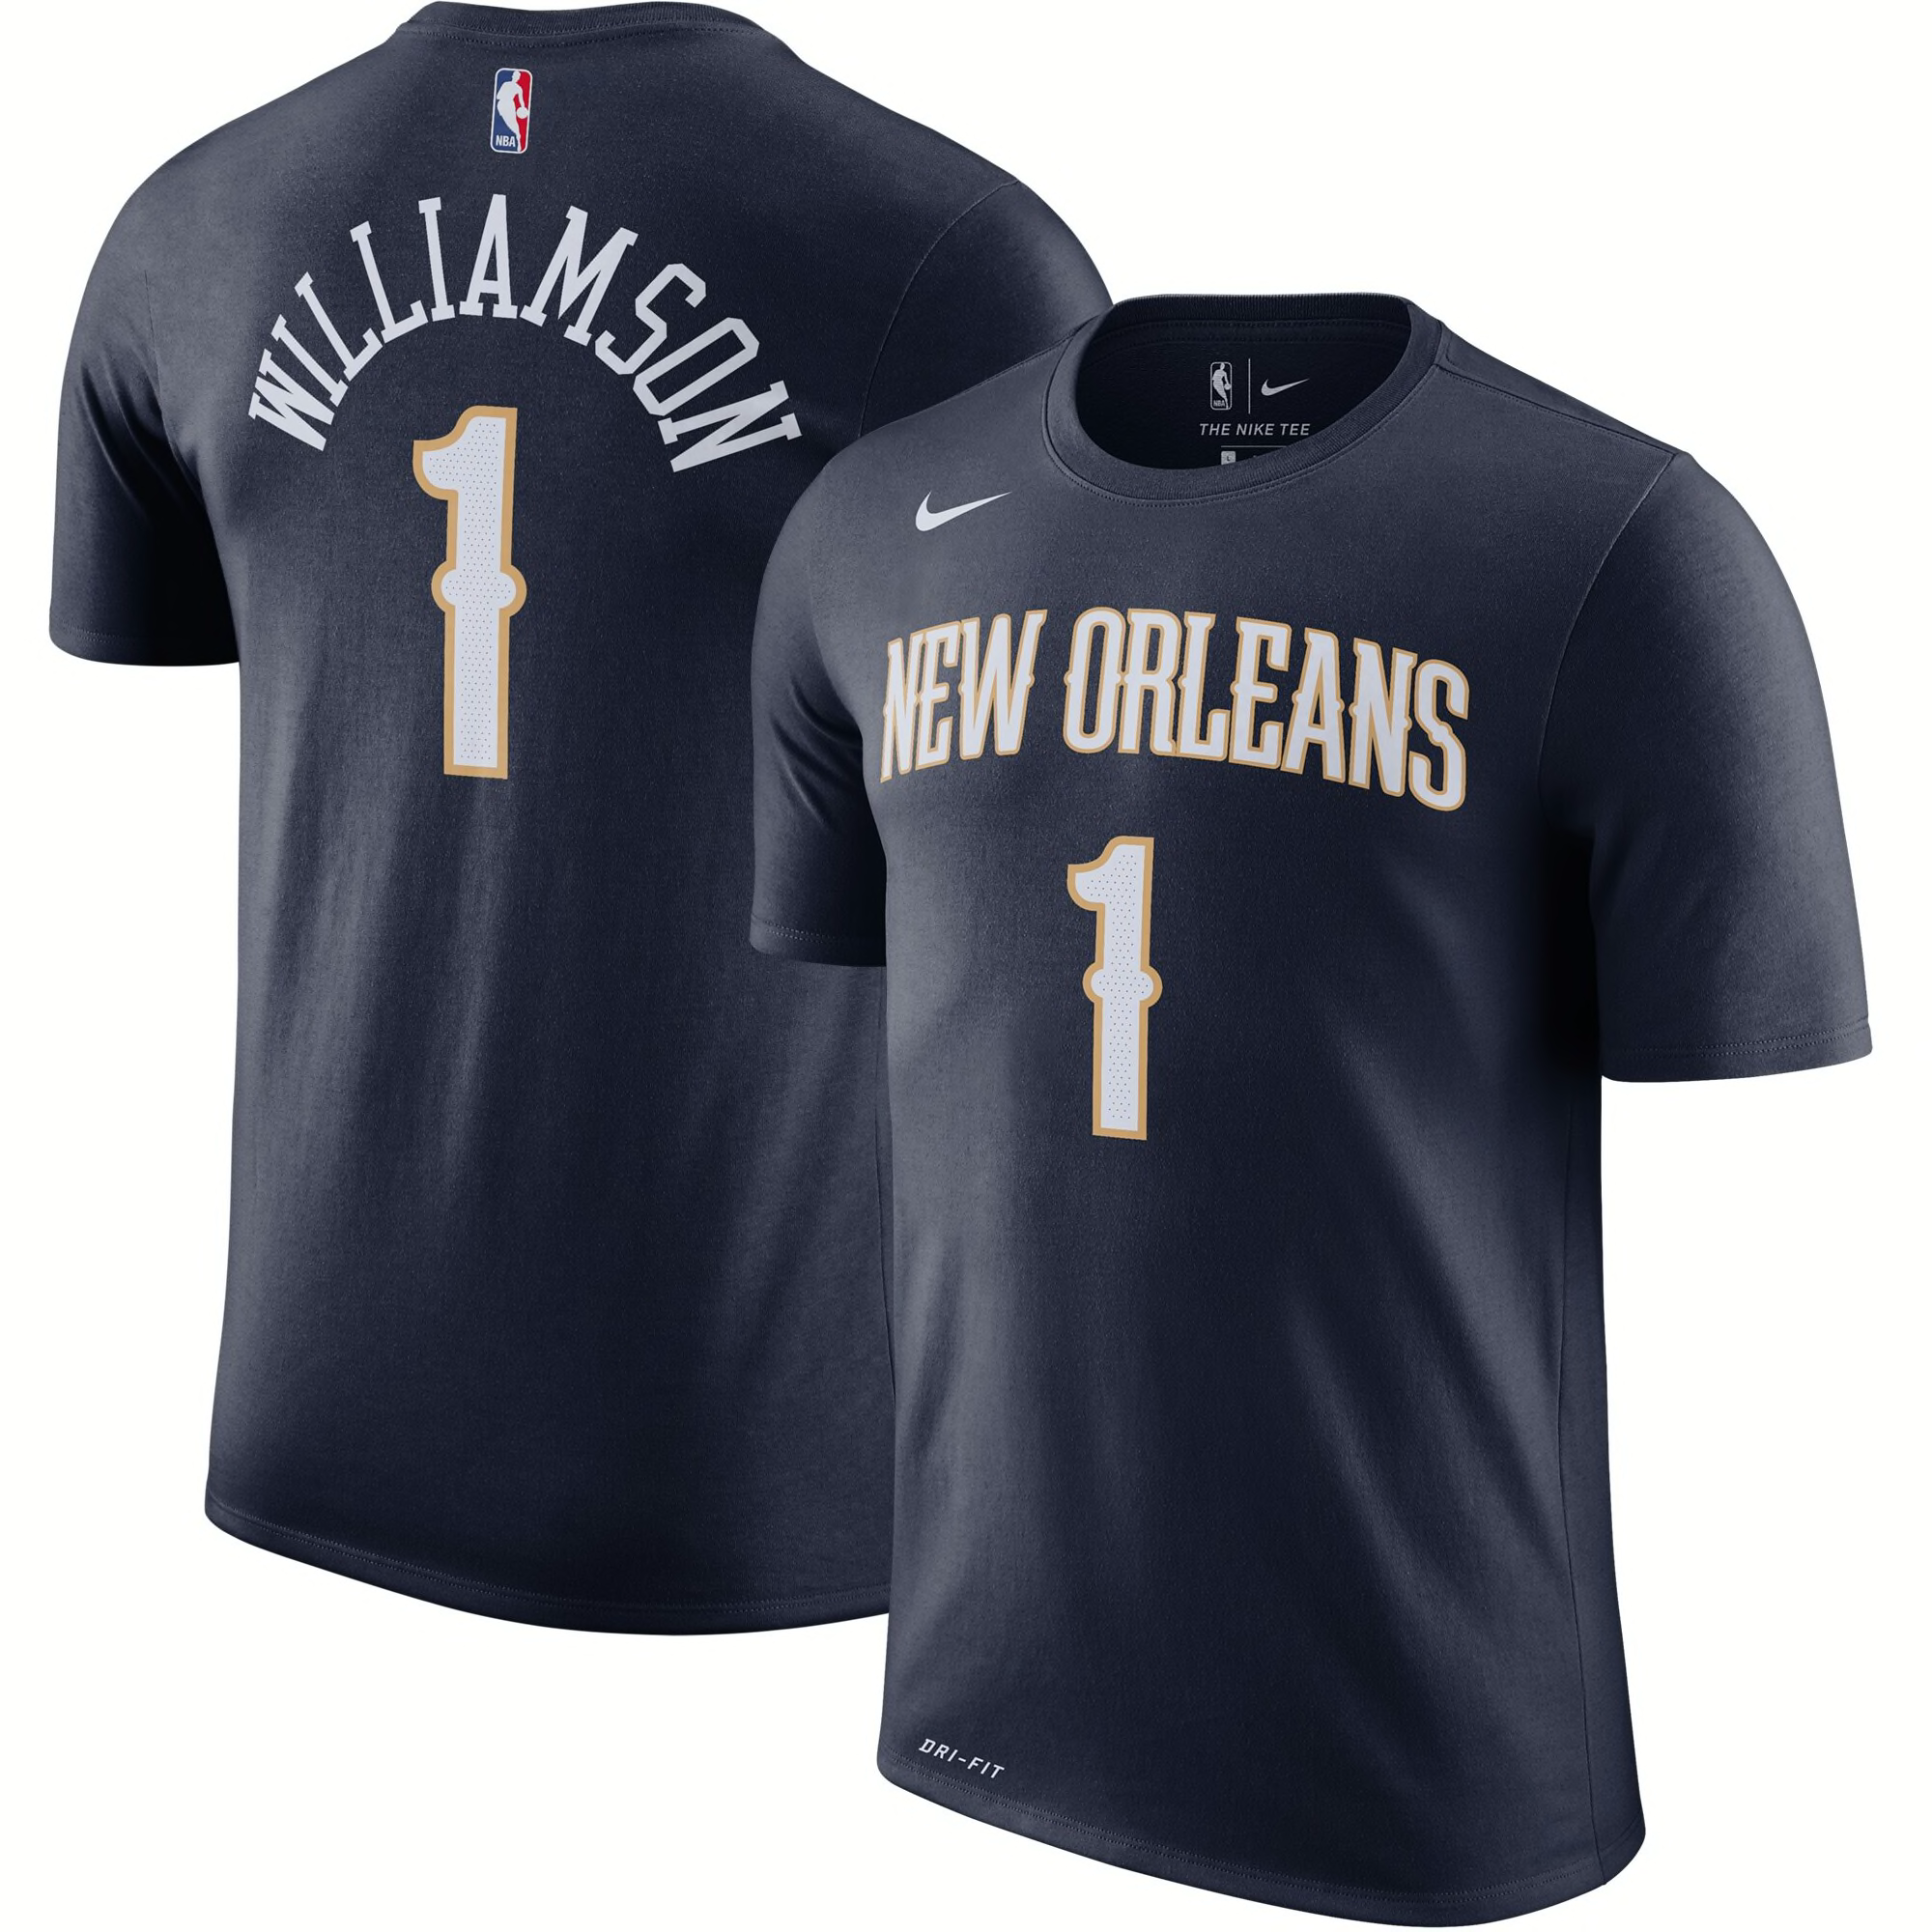 New Orleans Pelicans Shirt Vintage Basketball Fan Nba - Anynee